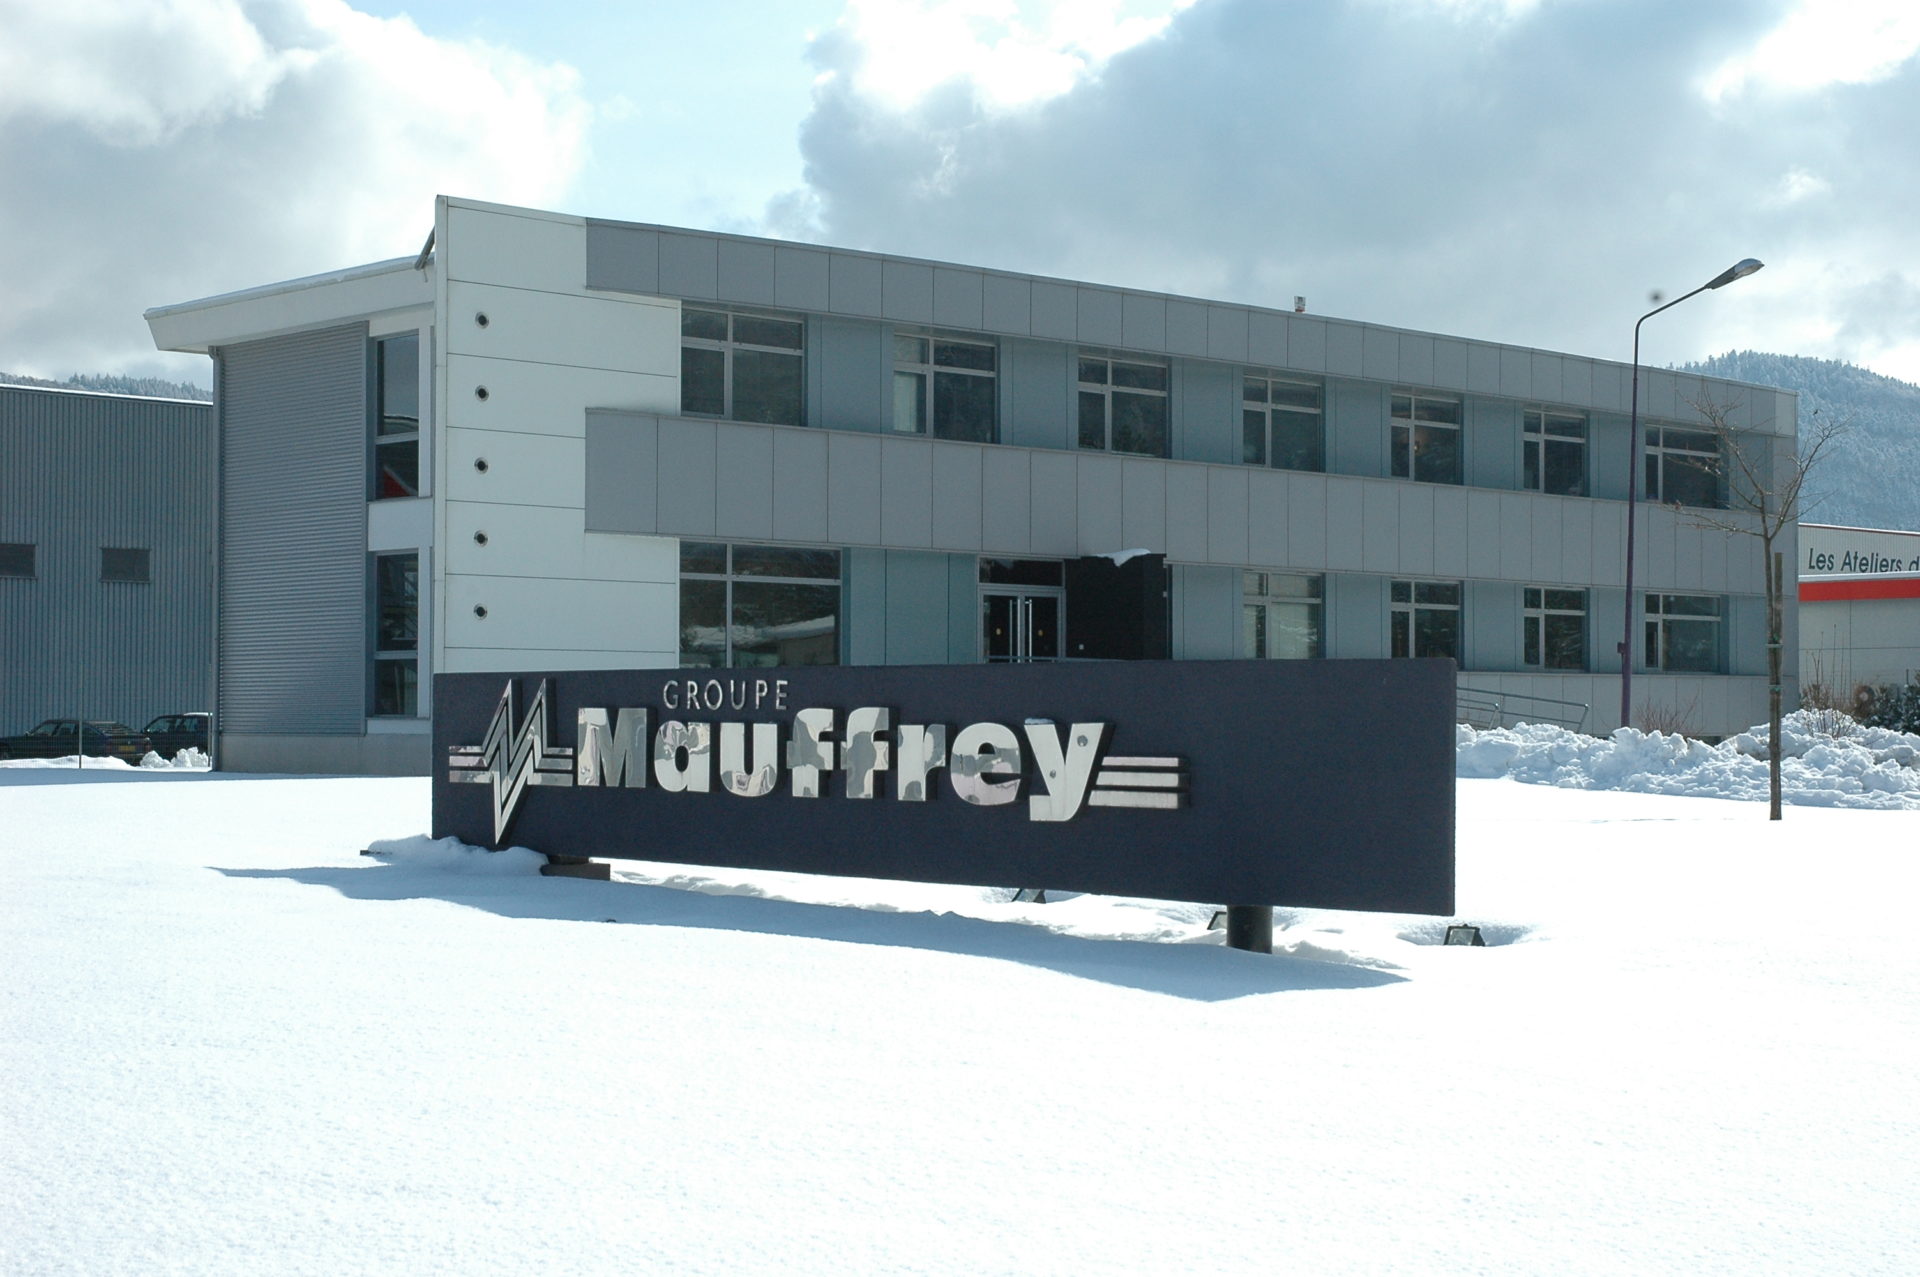 Groupe-Mauffrey-notre-histoire-Holding-Financiere